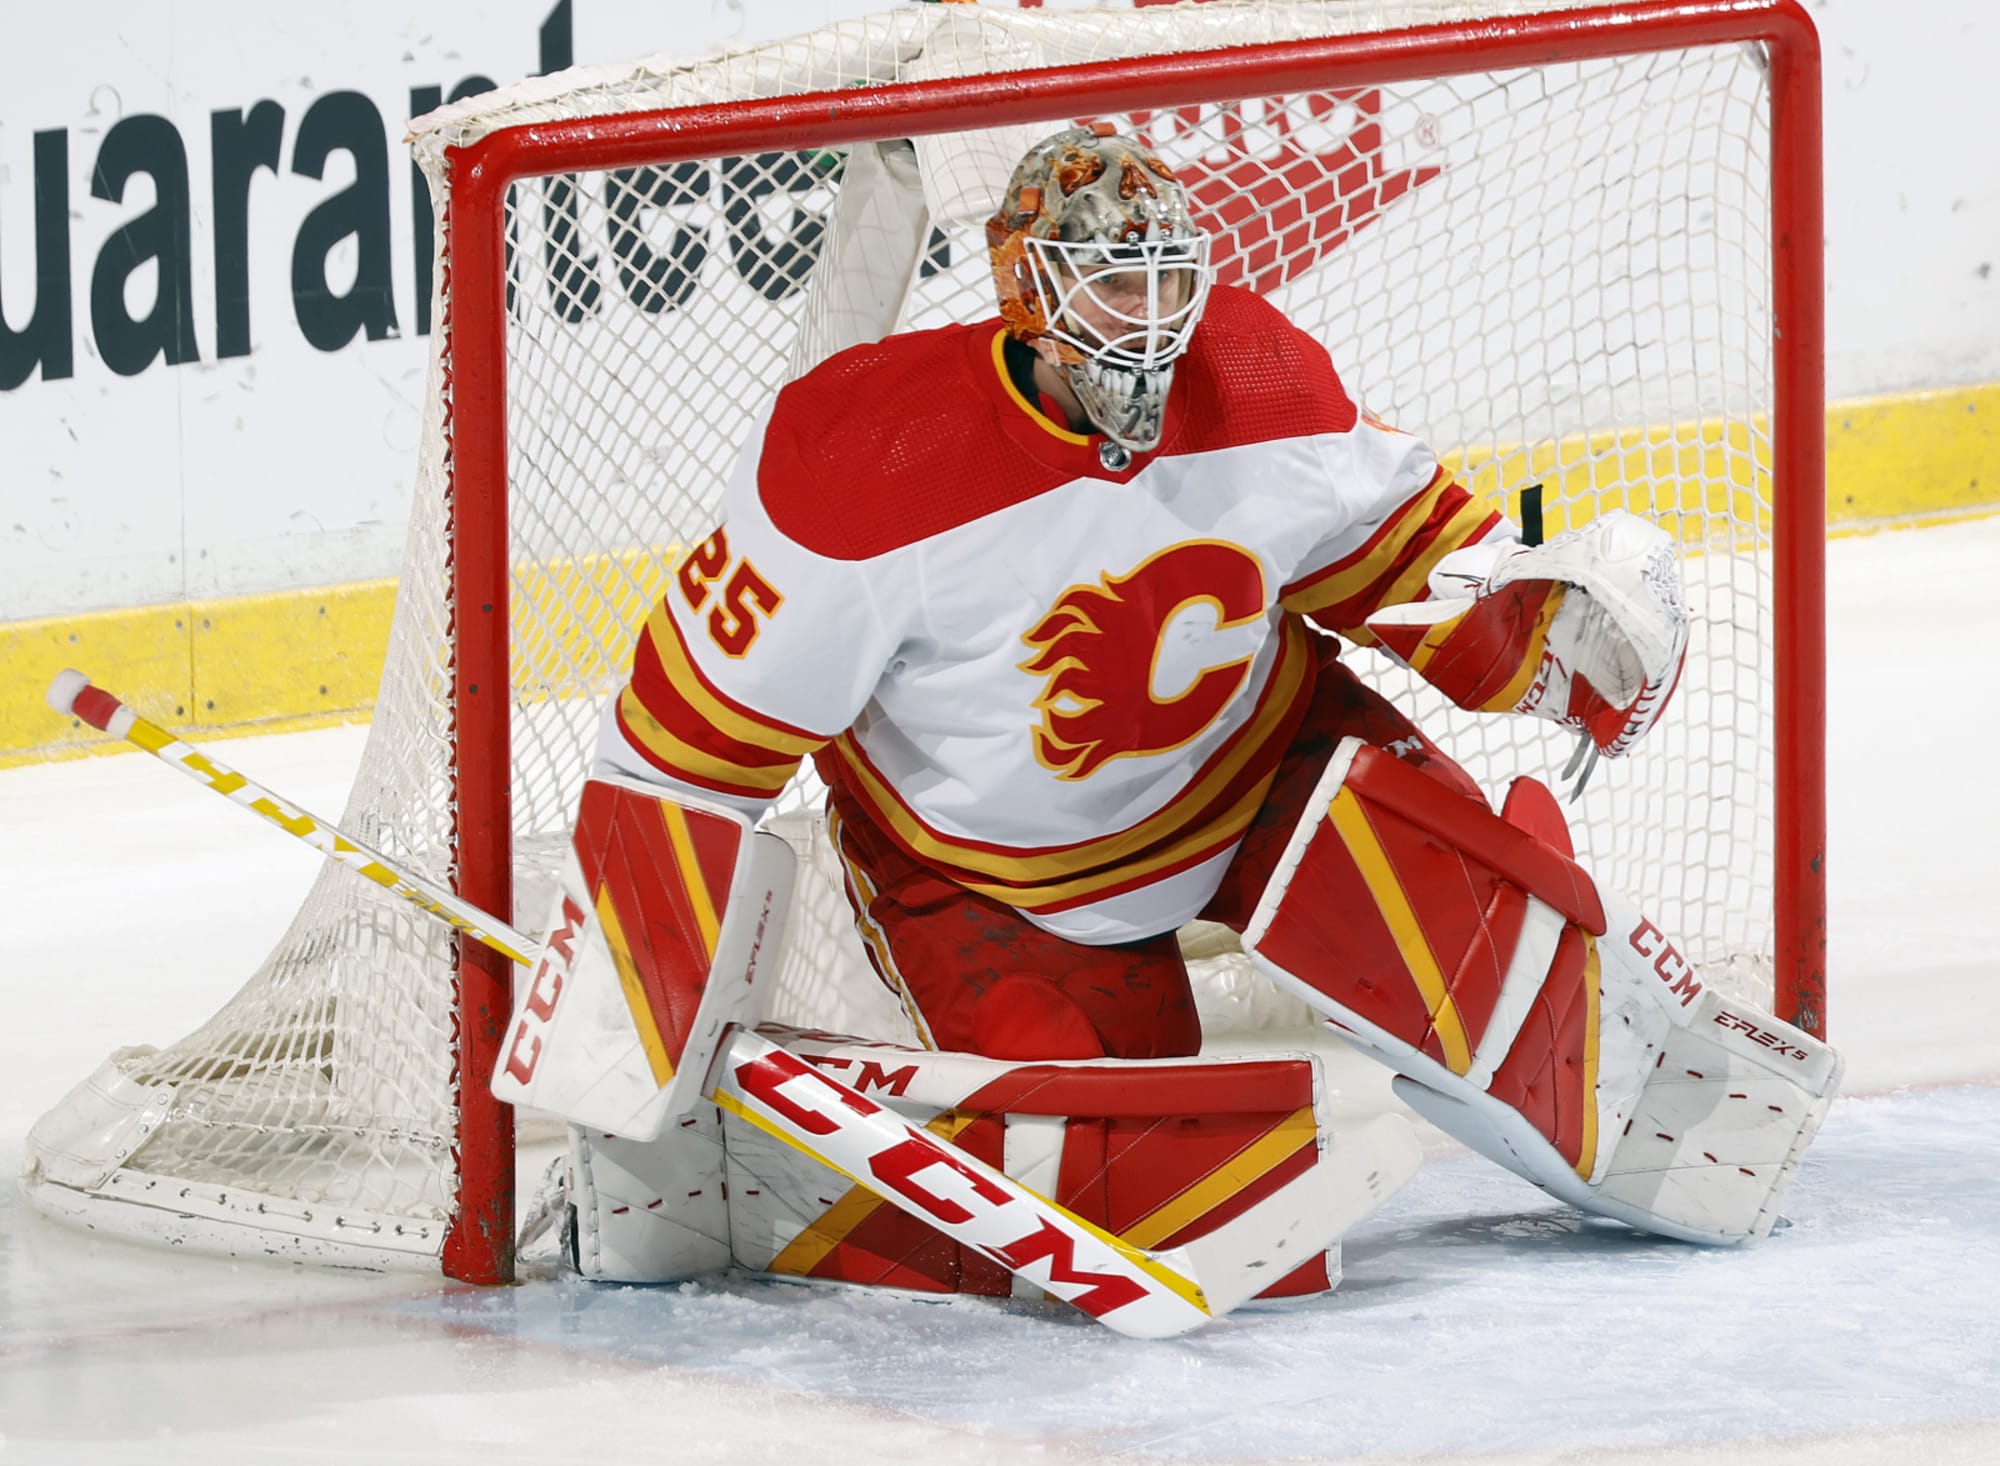 Miikka Kiprusoff injury: Flames goaltender out for 'short-term' 